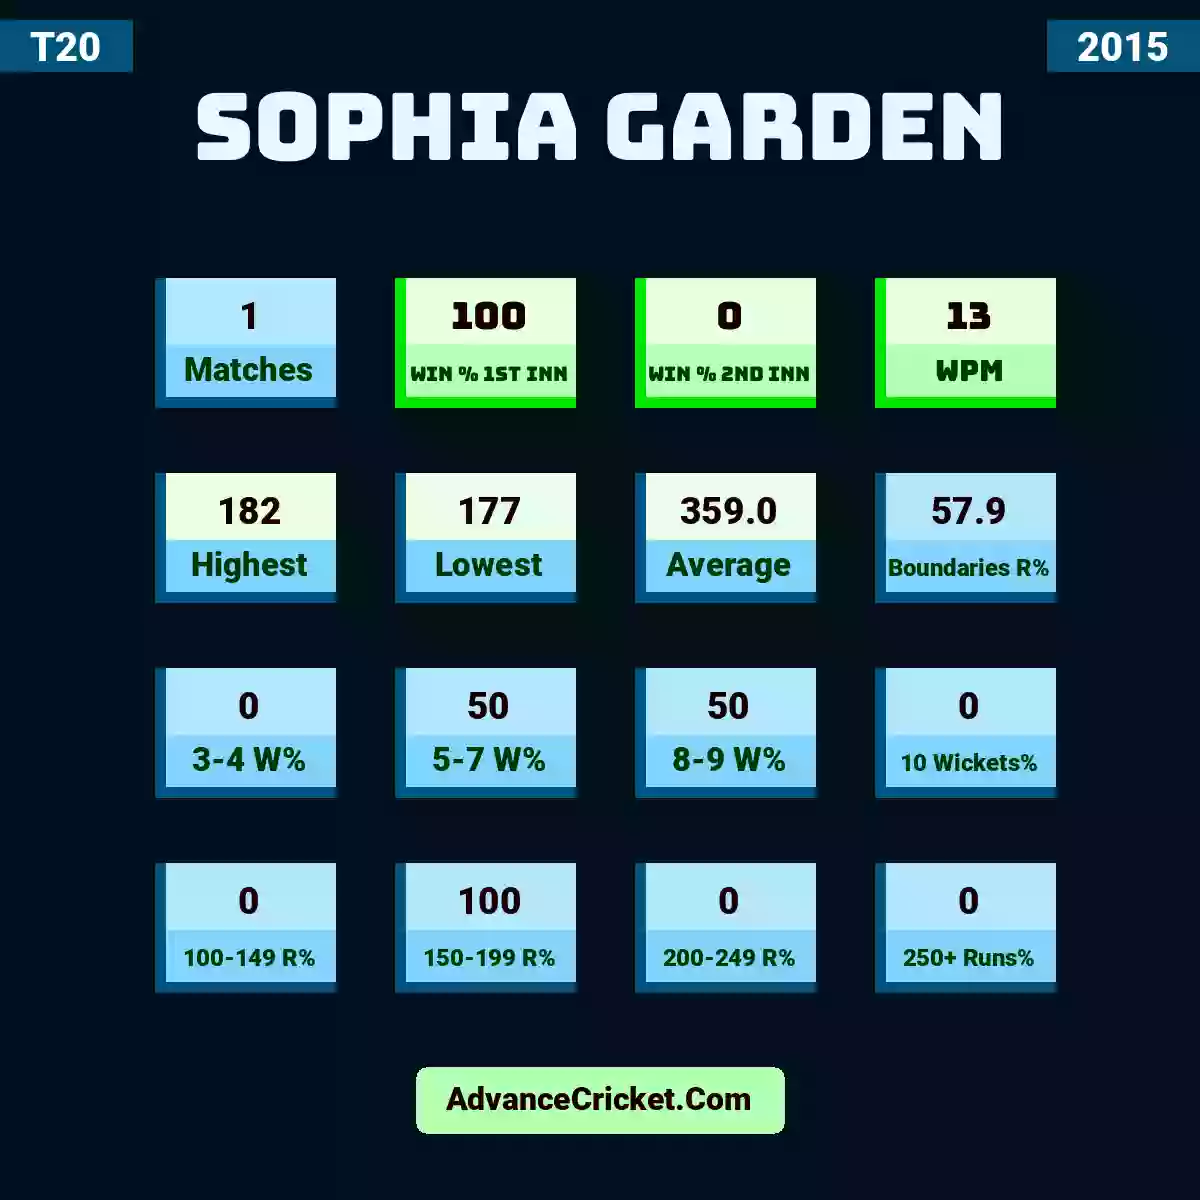 Image showing Sophia Garden with Matches: 1, Win % 1st Inn: 100, Win % 2nd Inn: 0, WPM: 13, Highest: 182, Lowest: 177, Average: 359.0, Boundaries R%: 57.9, 3-4 W%: 0, 5-7 W%: 50, 8-9 W%: 50, 10 Wickets%: 0, 100-149 R%: 0, 150-199 R%: 100, 200-249 R%: 0, 250+ Runs%: 0.